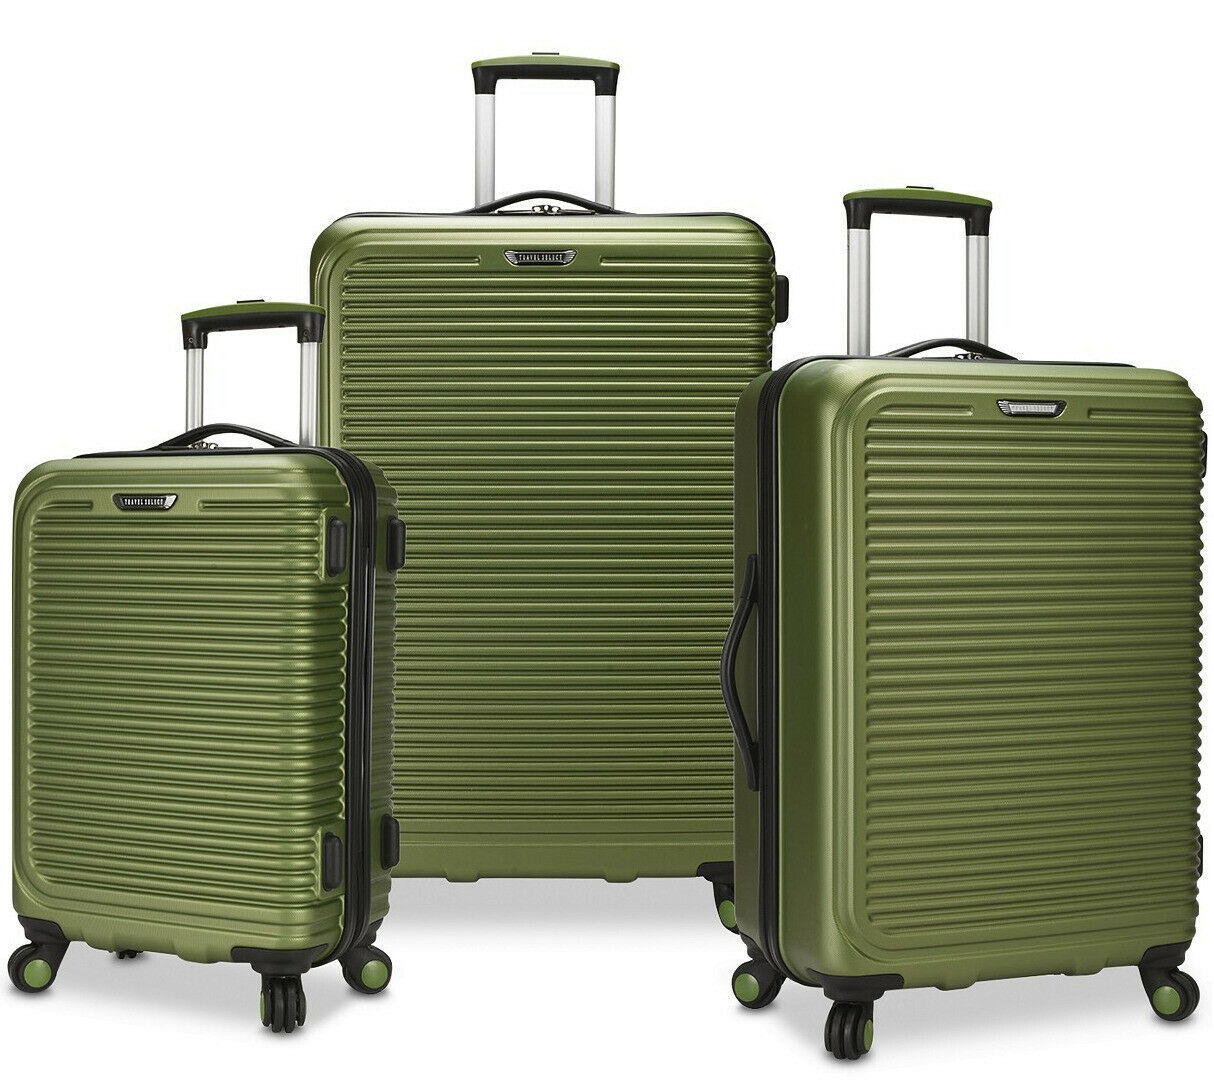 Travel Select Savannah 3-Pc. Hardside Spinner Luggage Set - Green - Luggage